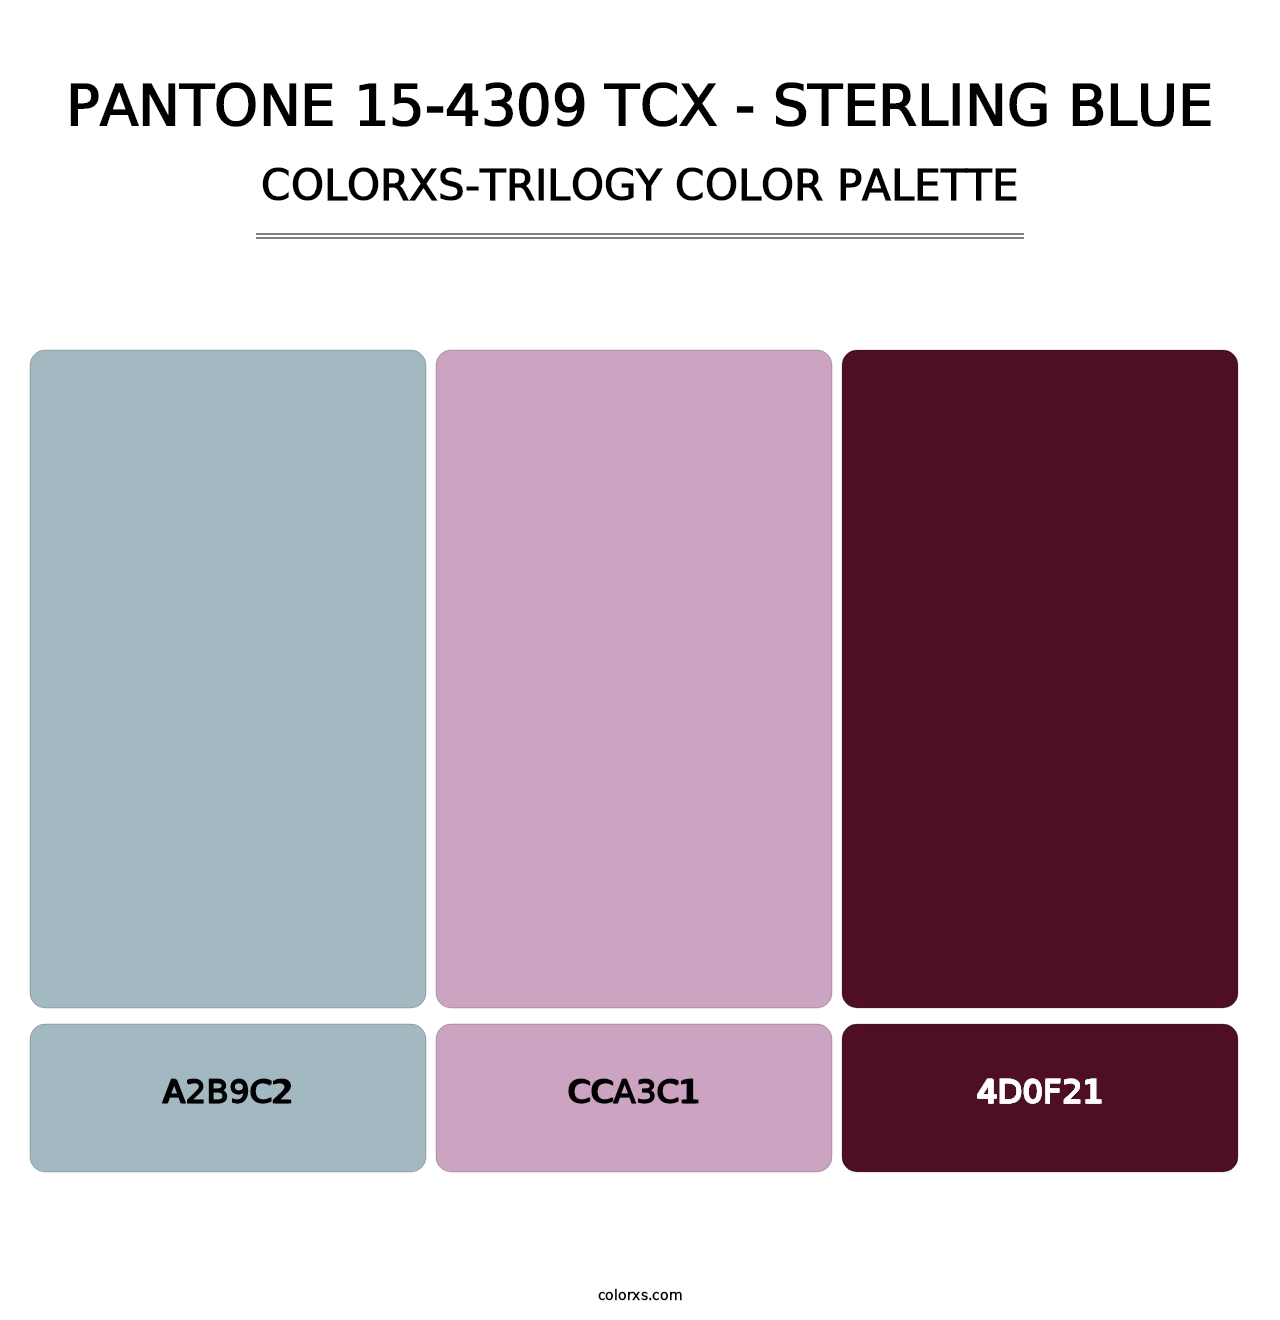 PANTONE 15-4309 TCX - Sterling Blue - Colorxs Trilogy Palette